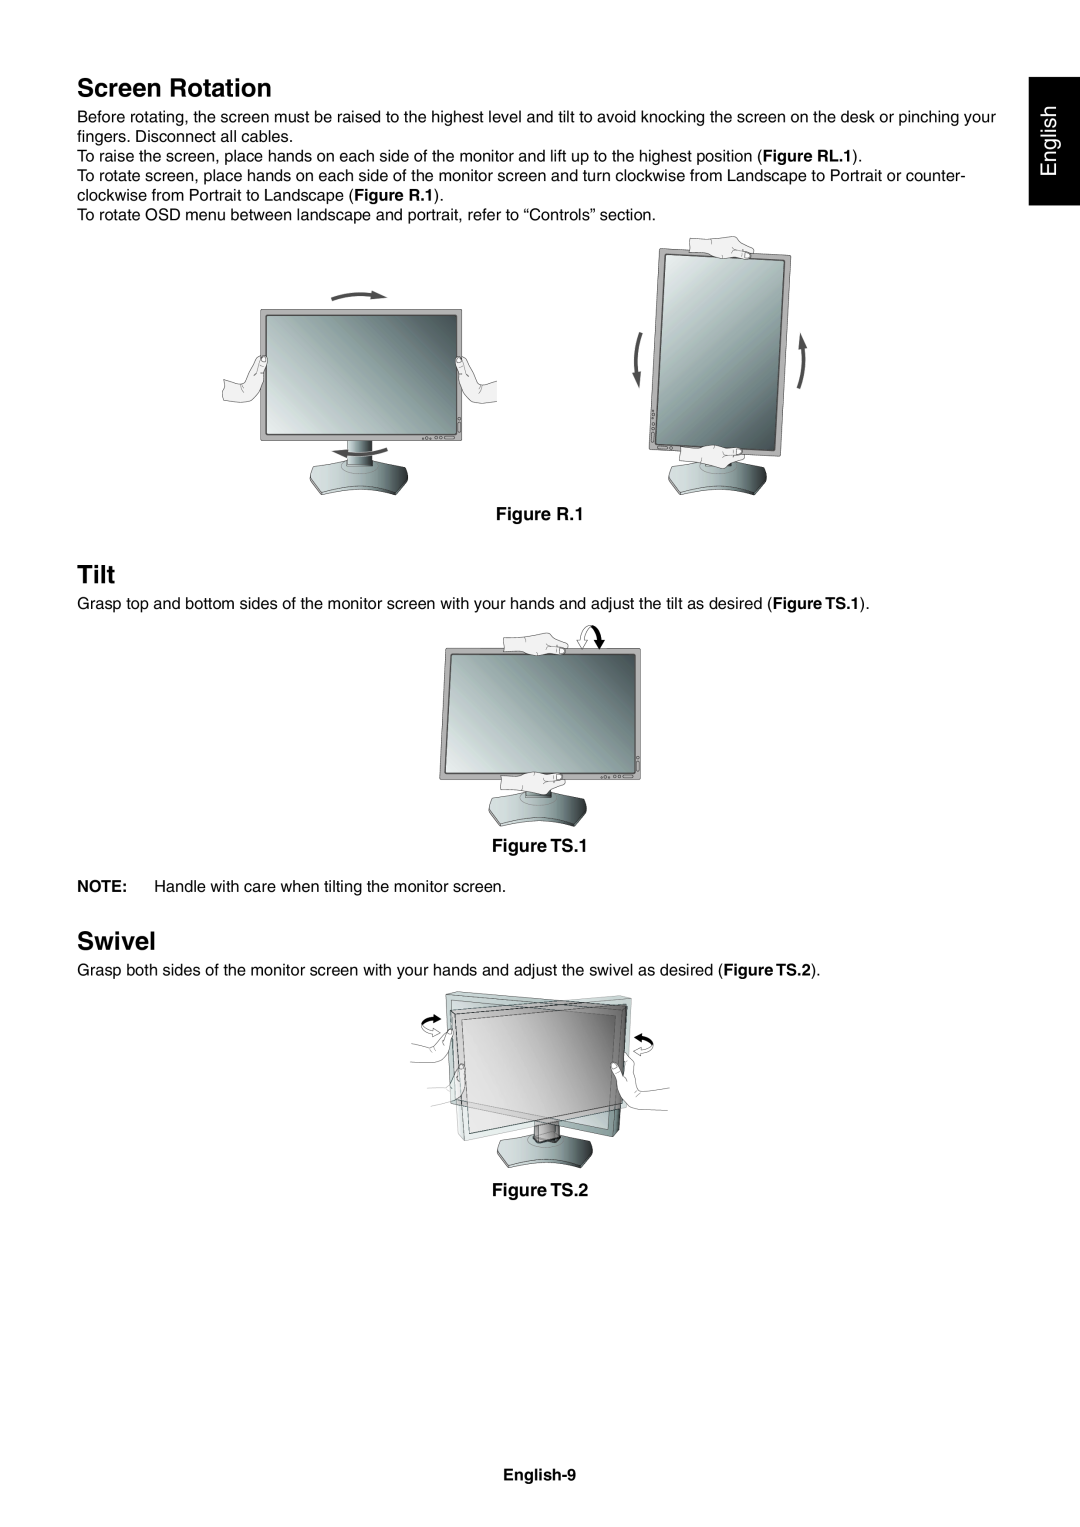 NEC PA242W user manual Screen Rotation, Tilt, Swivel, Figure R.1, Figure TS.1, Figure TS.2, English-9 